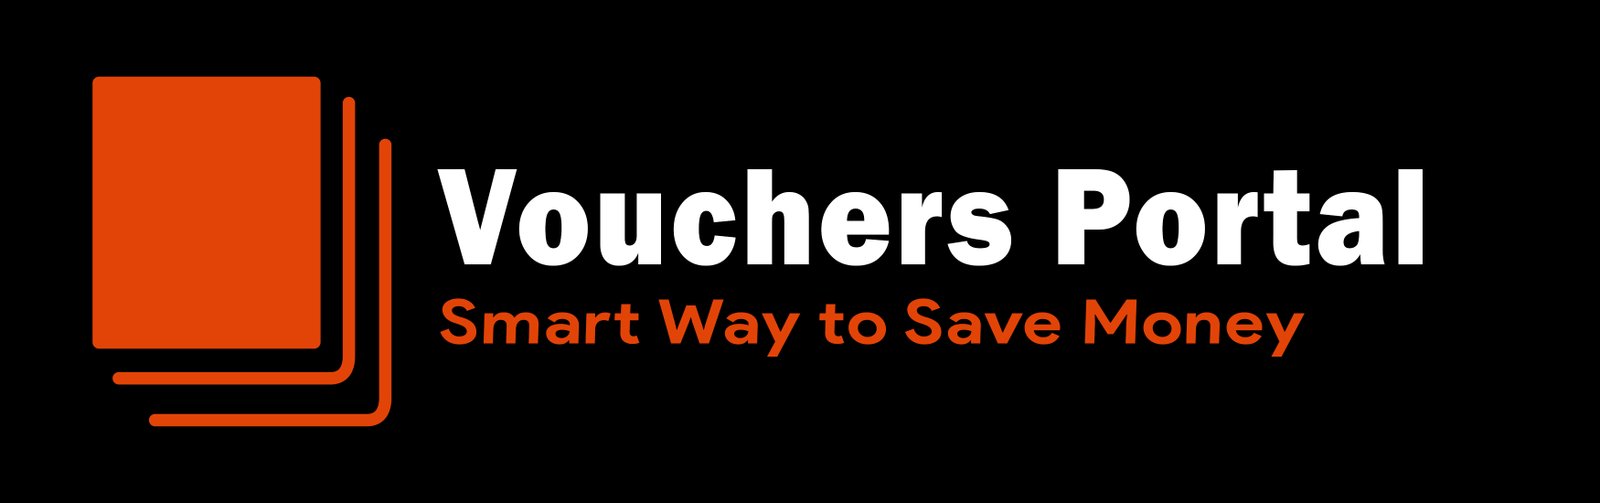 Vouchers Portal: Coupons, Offers, Promo Codes & Discounts